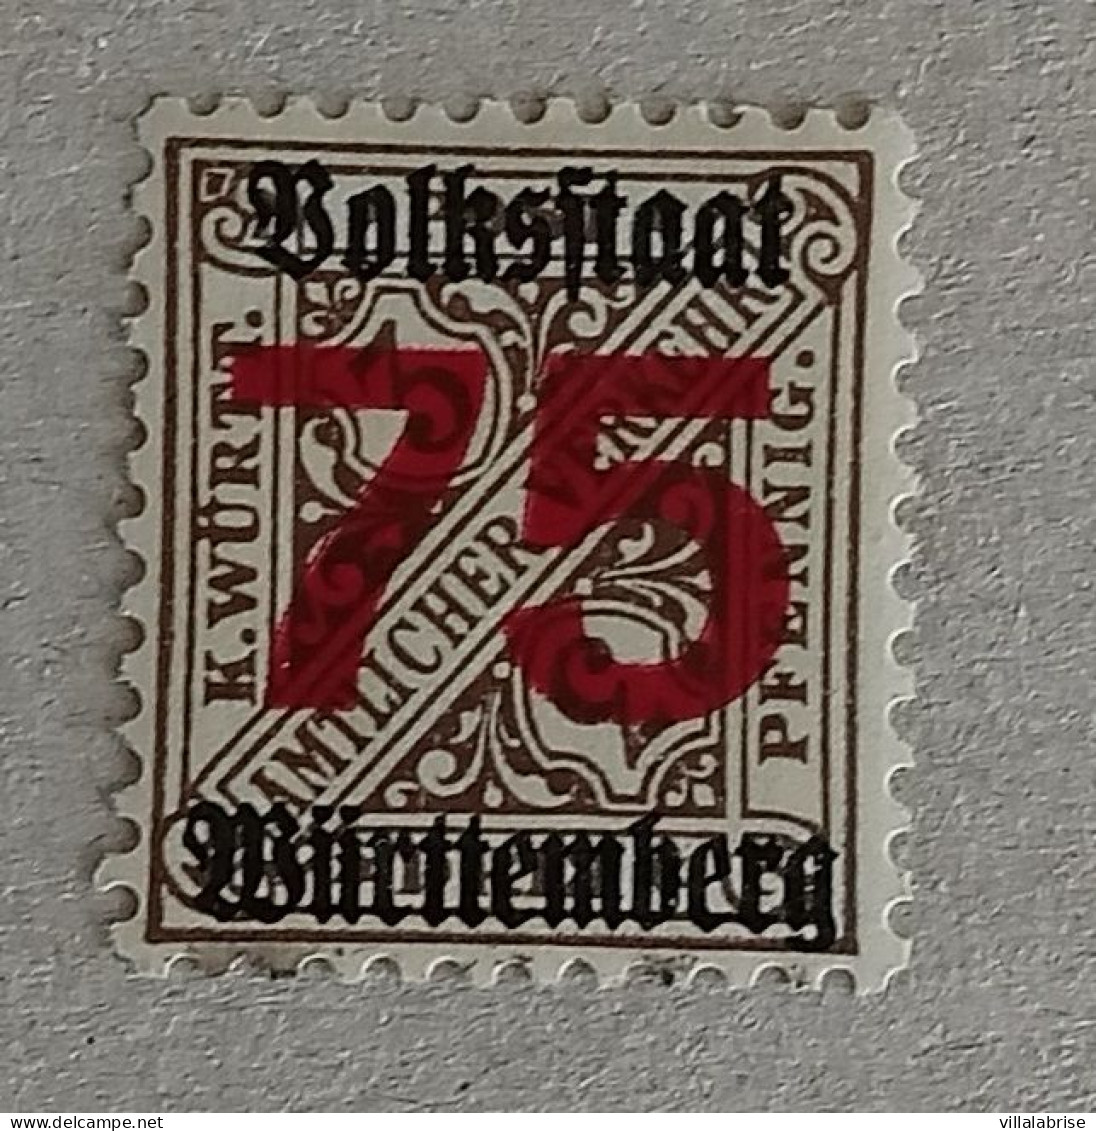 Wurtemberg Württemberg 1919 – Lot 4 timbres de service - MiNr 269Xb & 271X – Signature KLINKHAMMER BPP